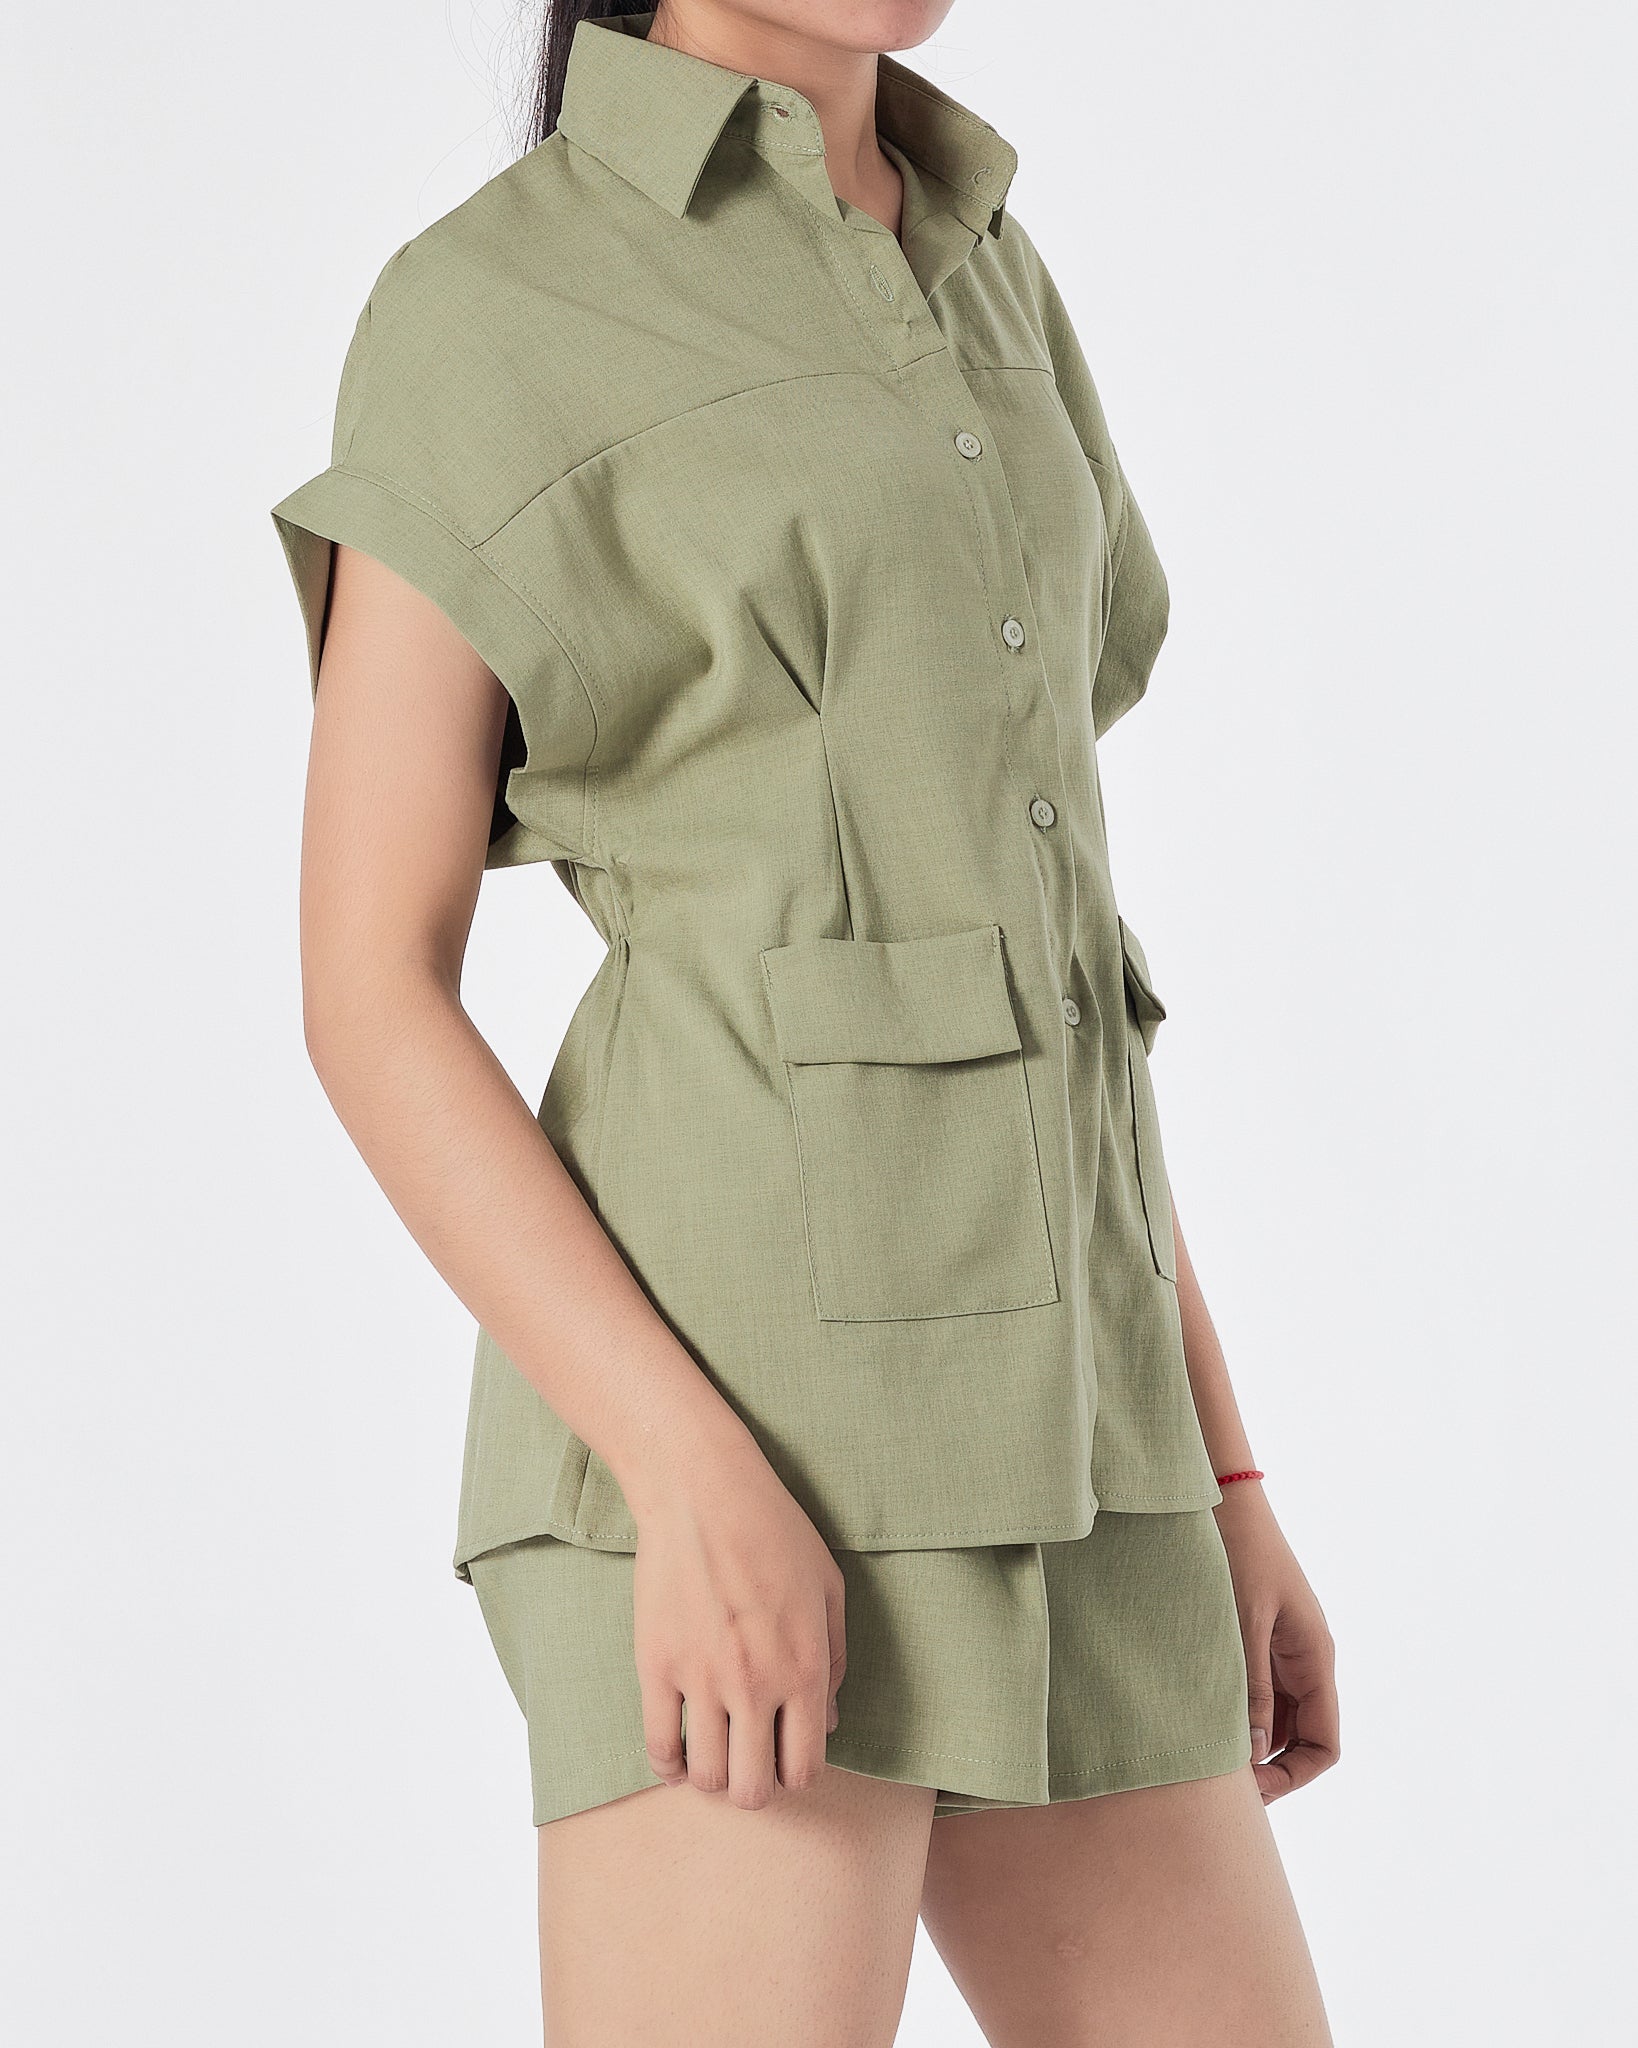 Lady Green Set Shirt + Short 2 Piece Outfit 19.90